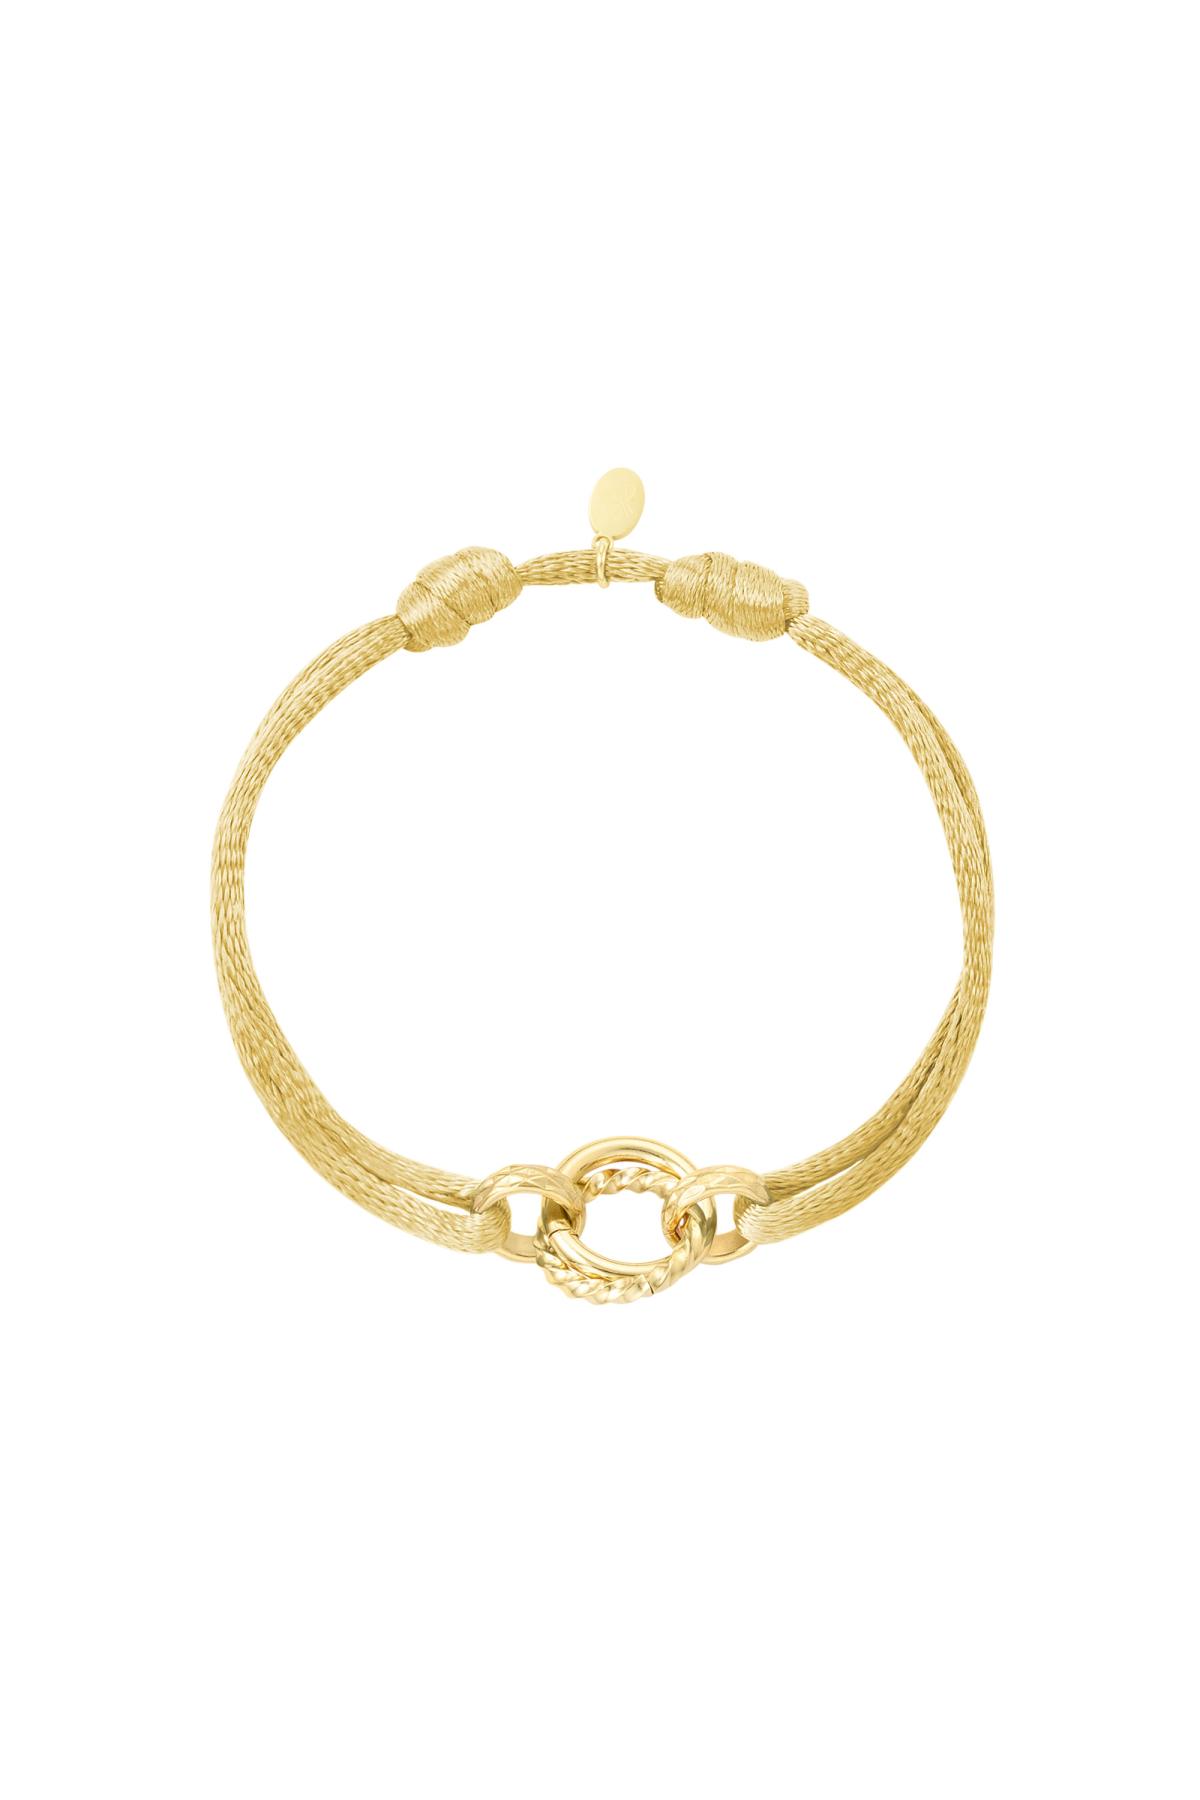 Cercle de bracelet en tissu Champagne Acier inoxydable h5 